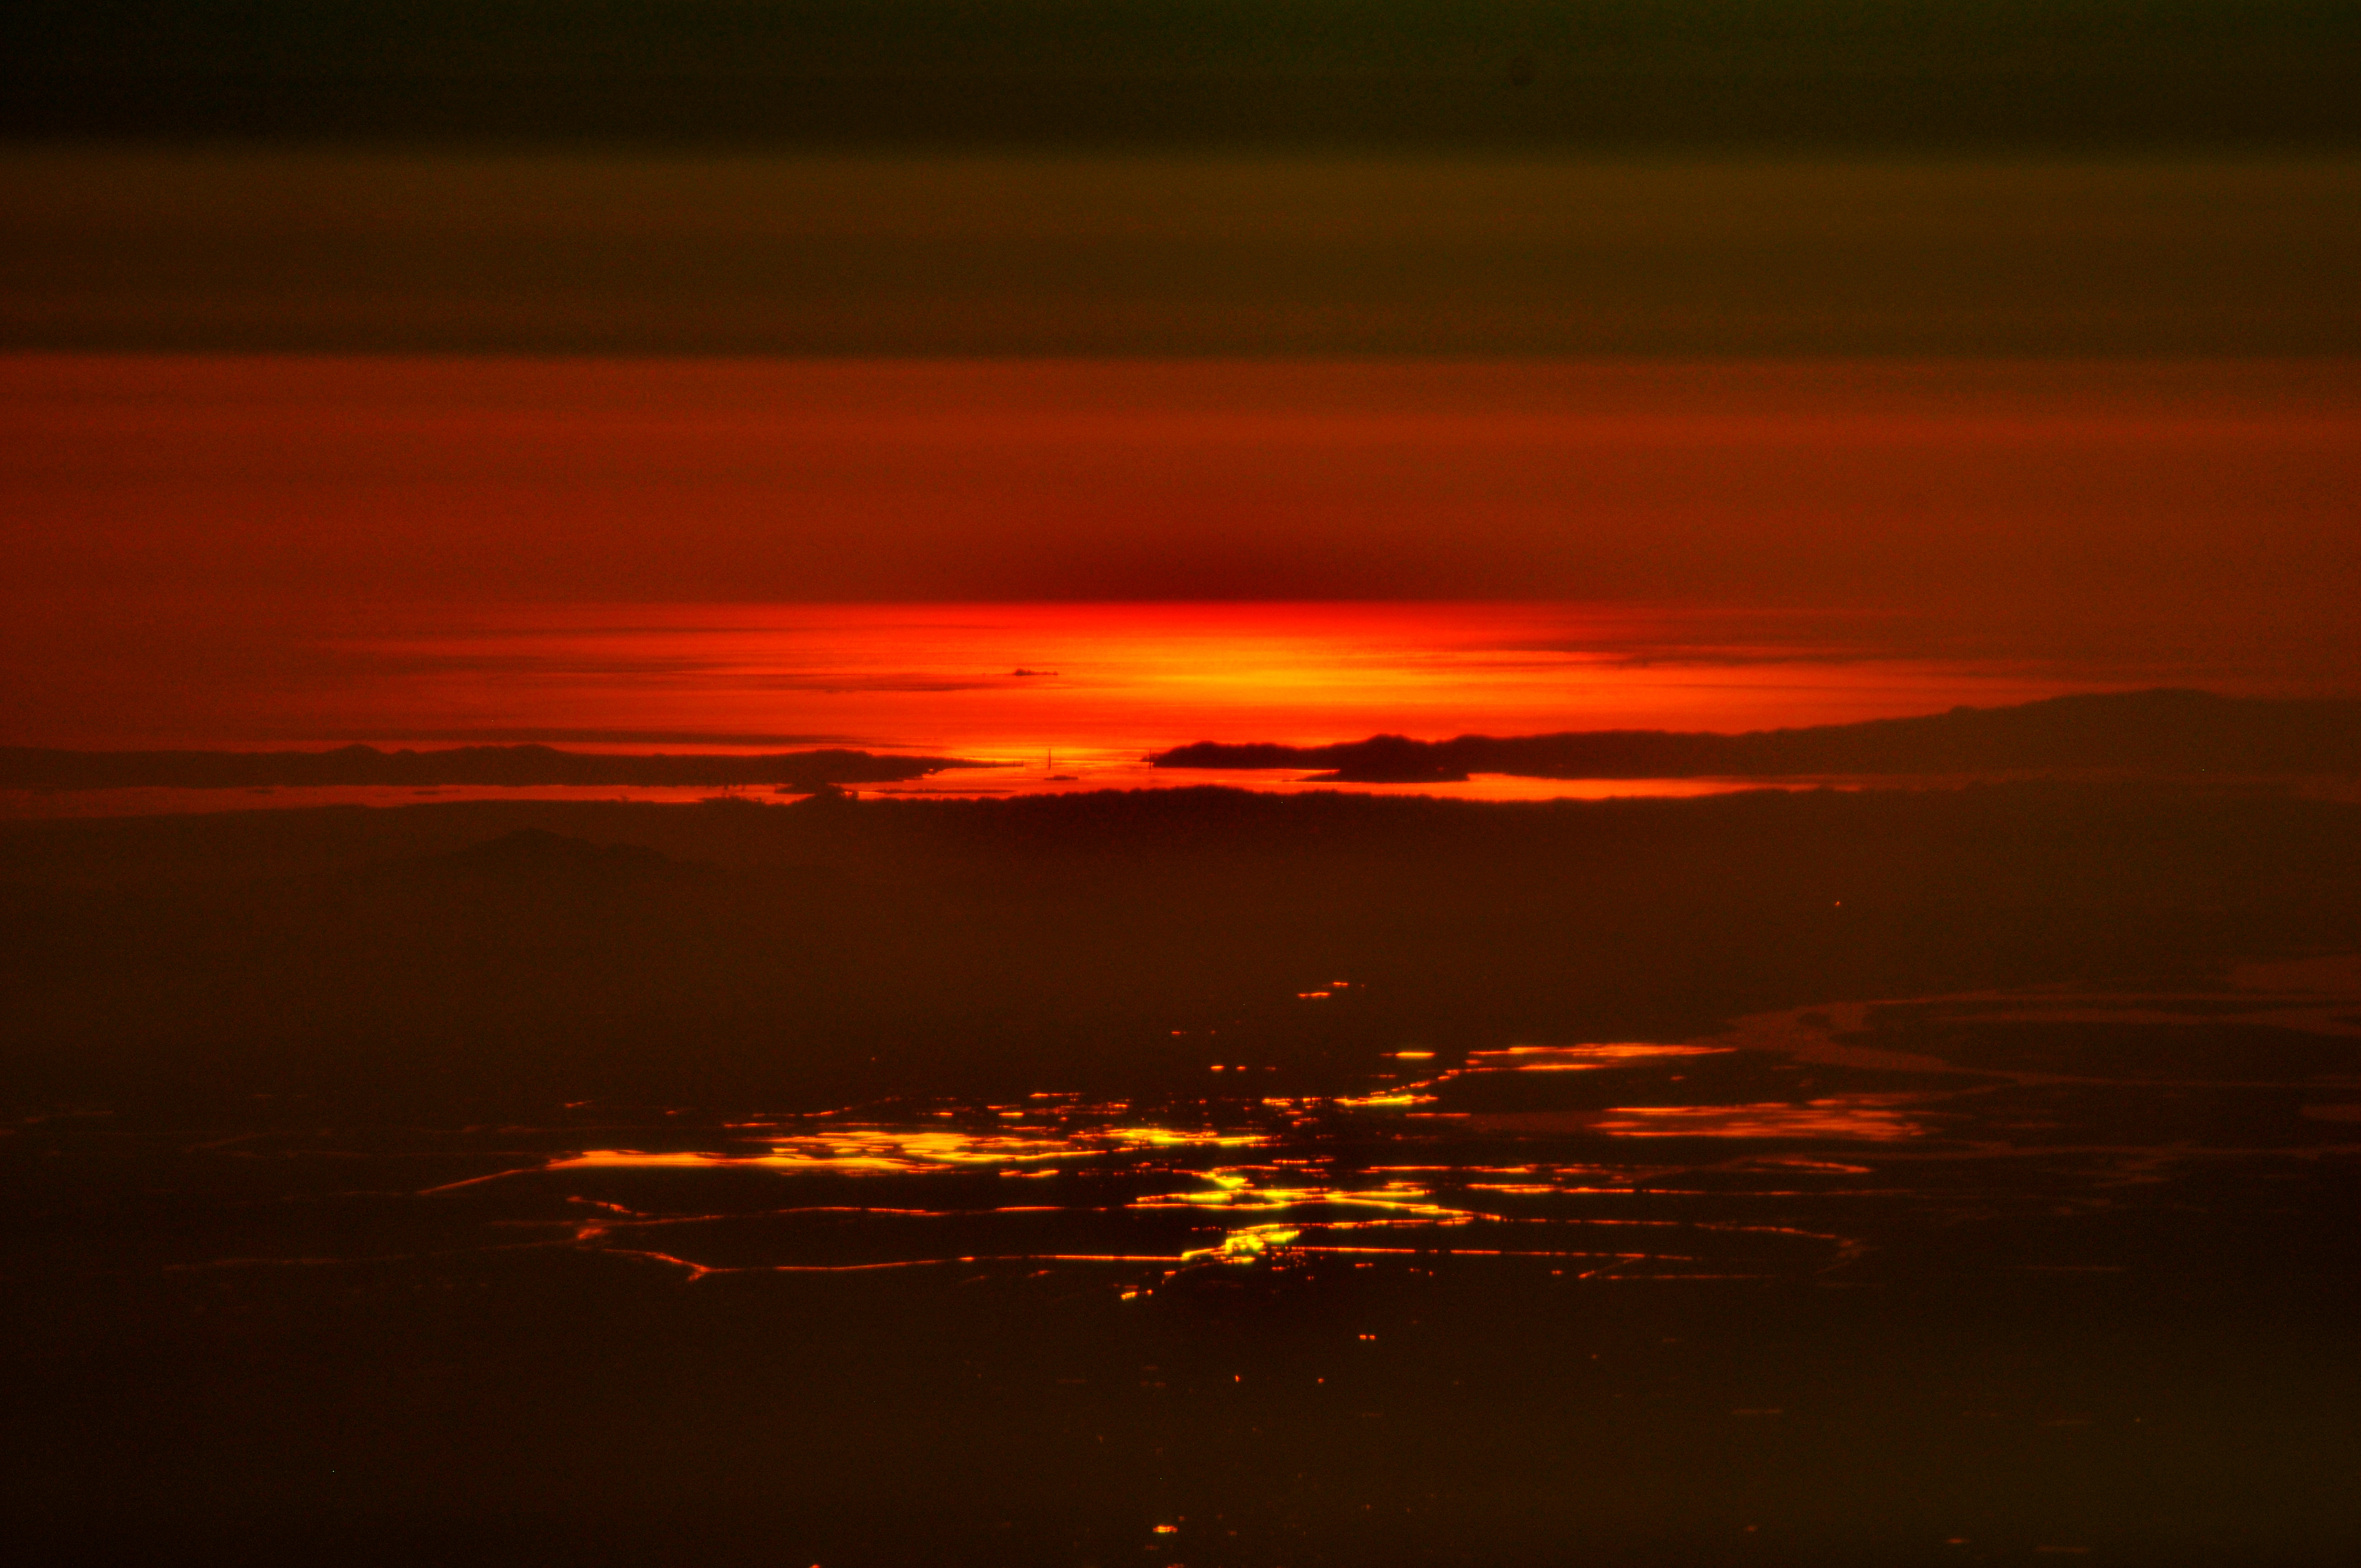 File:Aerial - San Francisco Bay at sunset 01.jpg - Wikimedia Commons